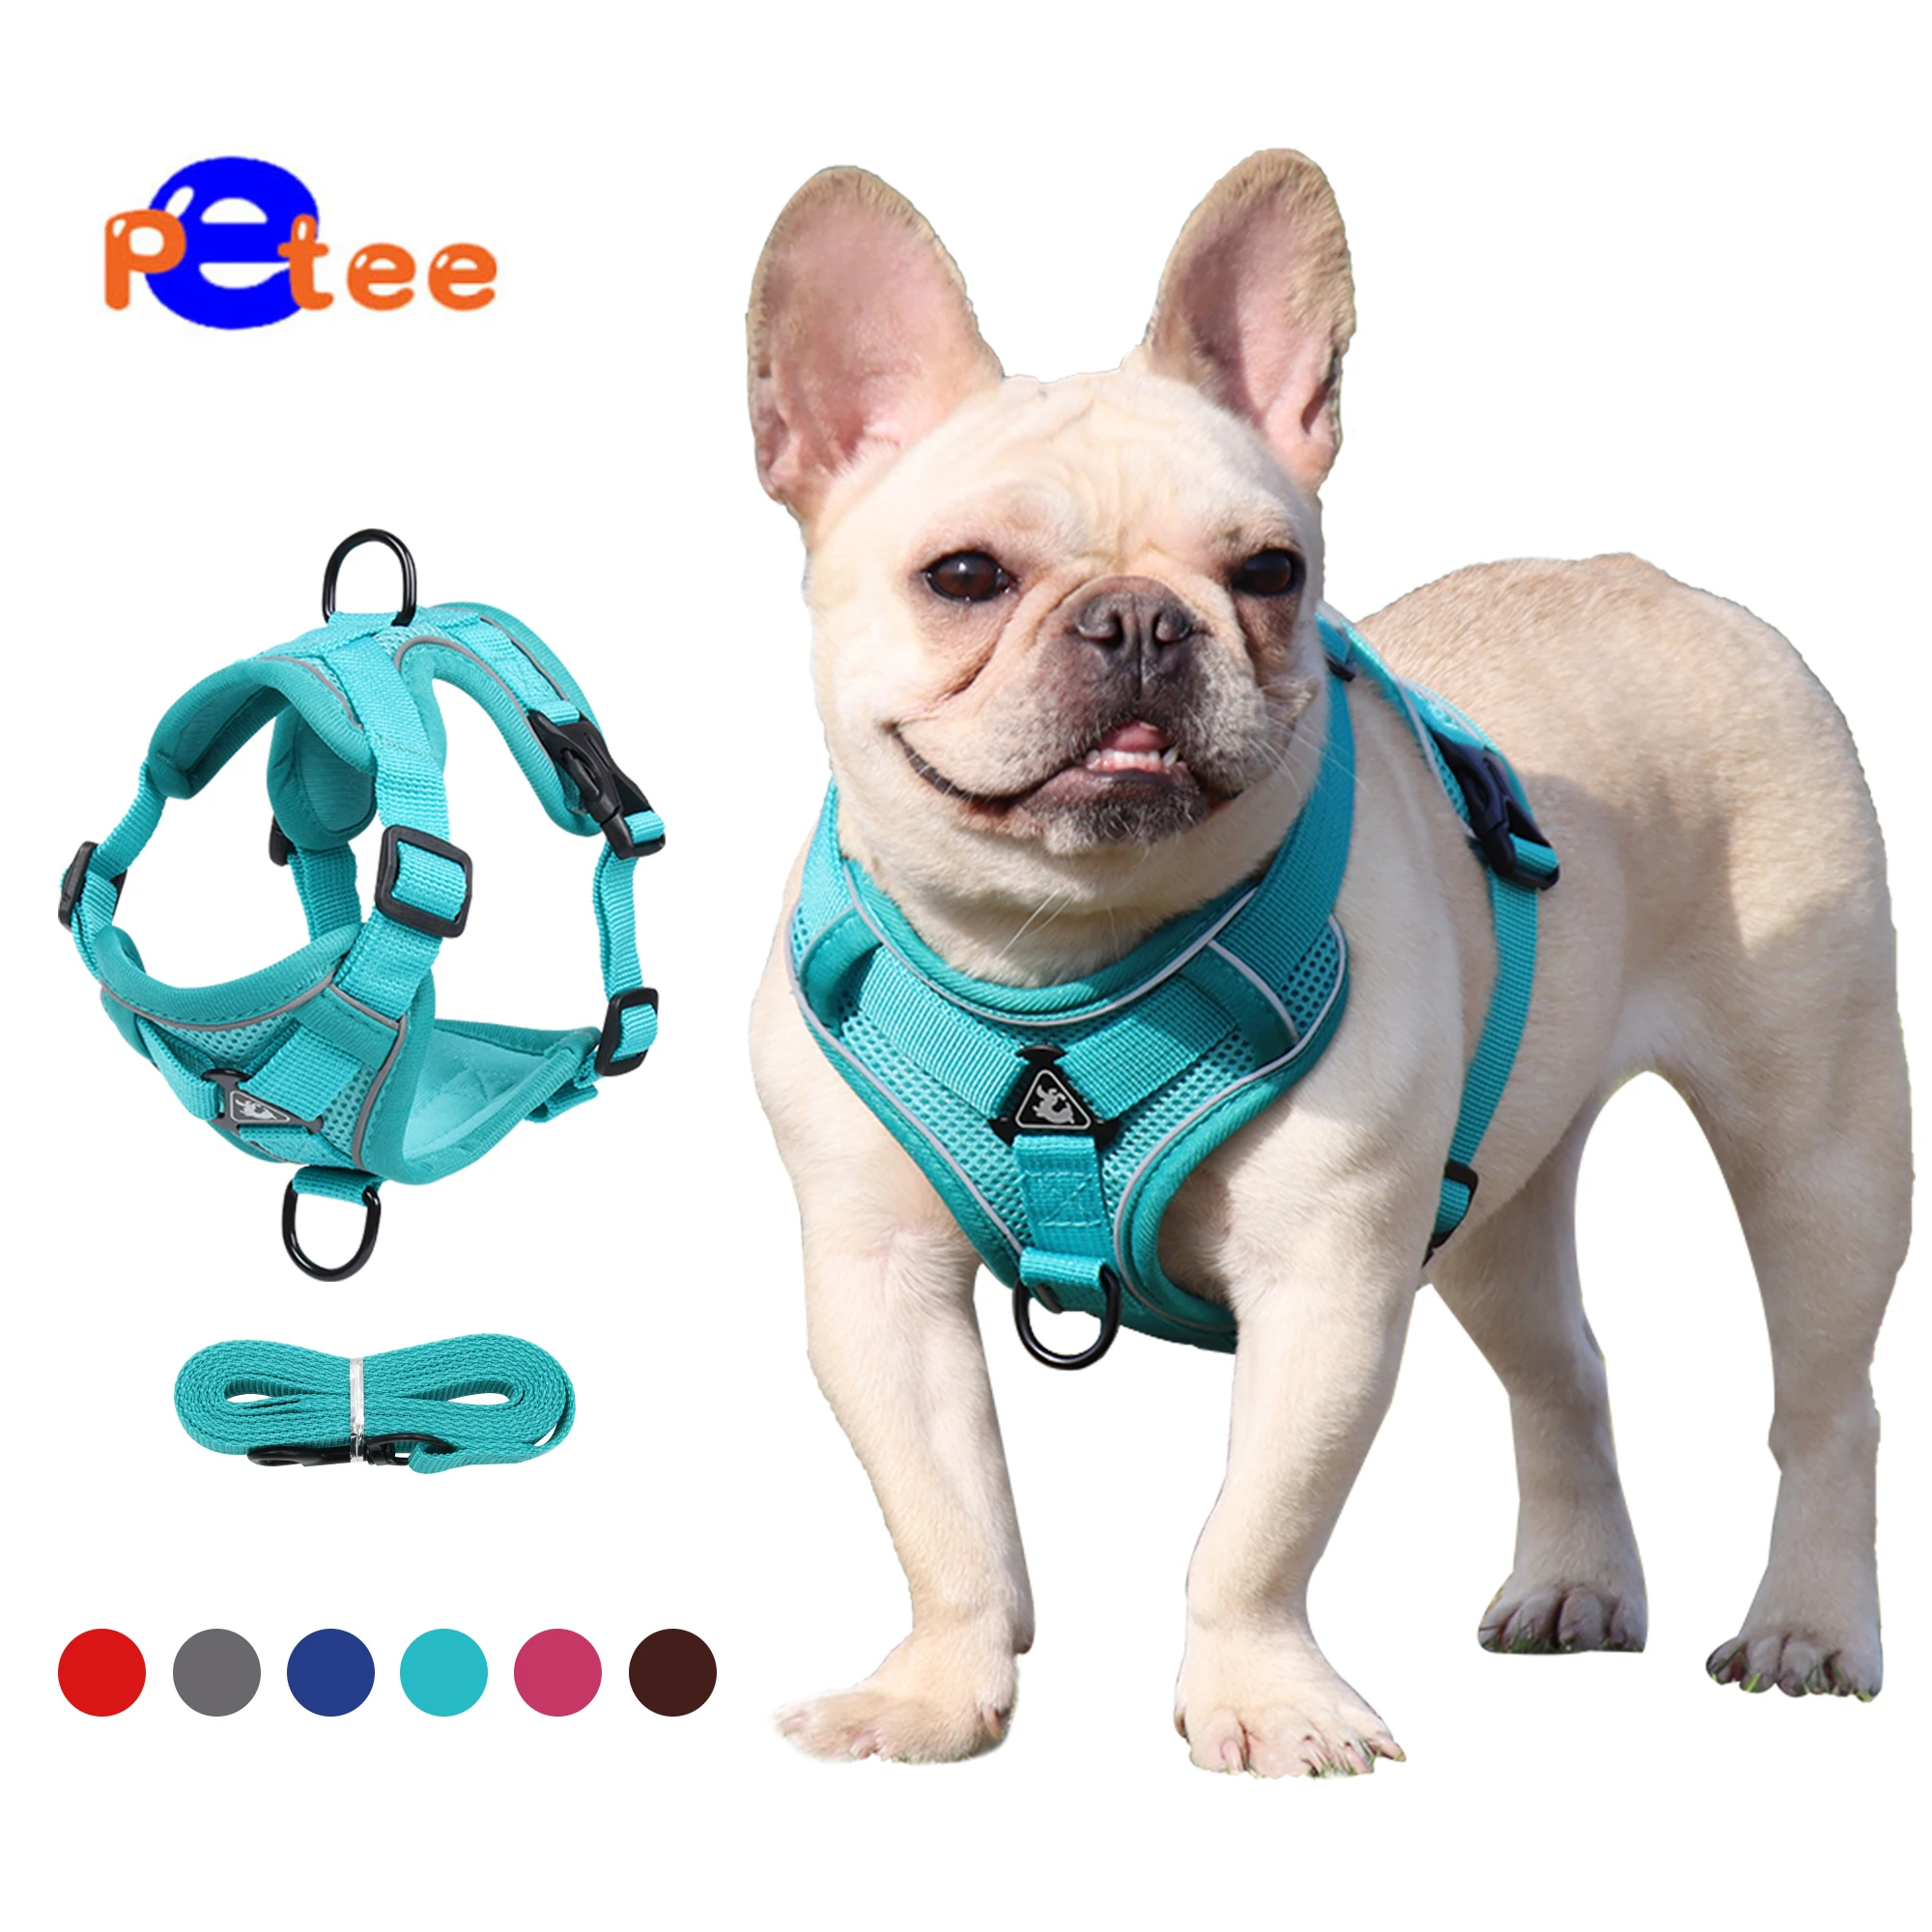 

Pet Reflective Nylon Dog Harness No Pull Adjustable Medium Large Naughty Dog Vest Safety Vehicular Lead Walking Running